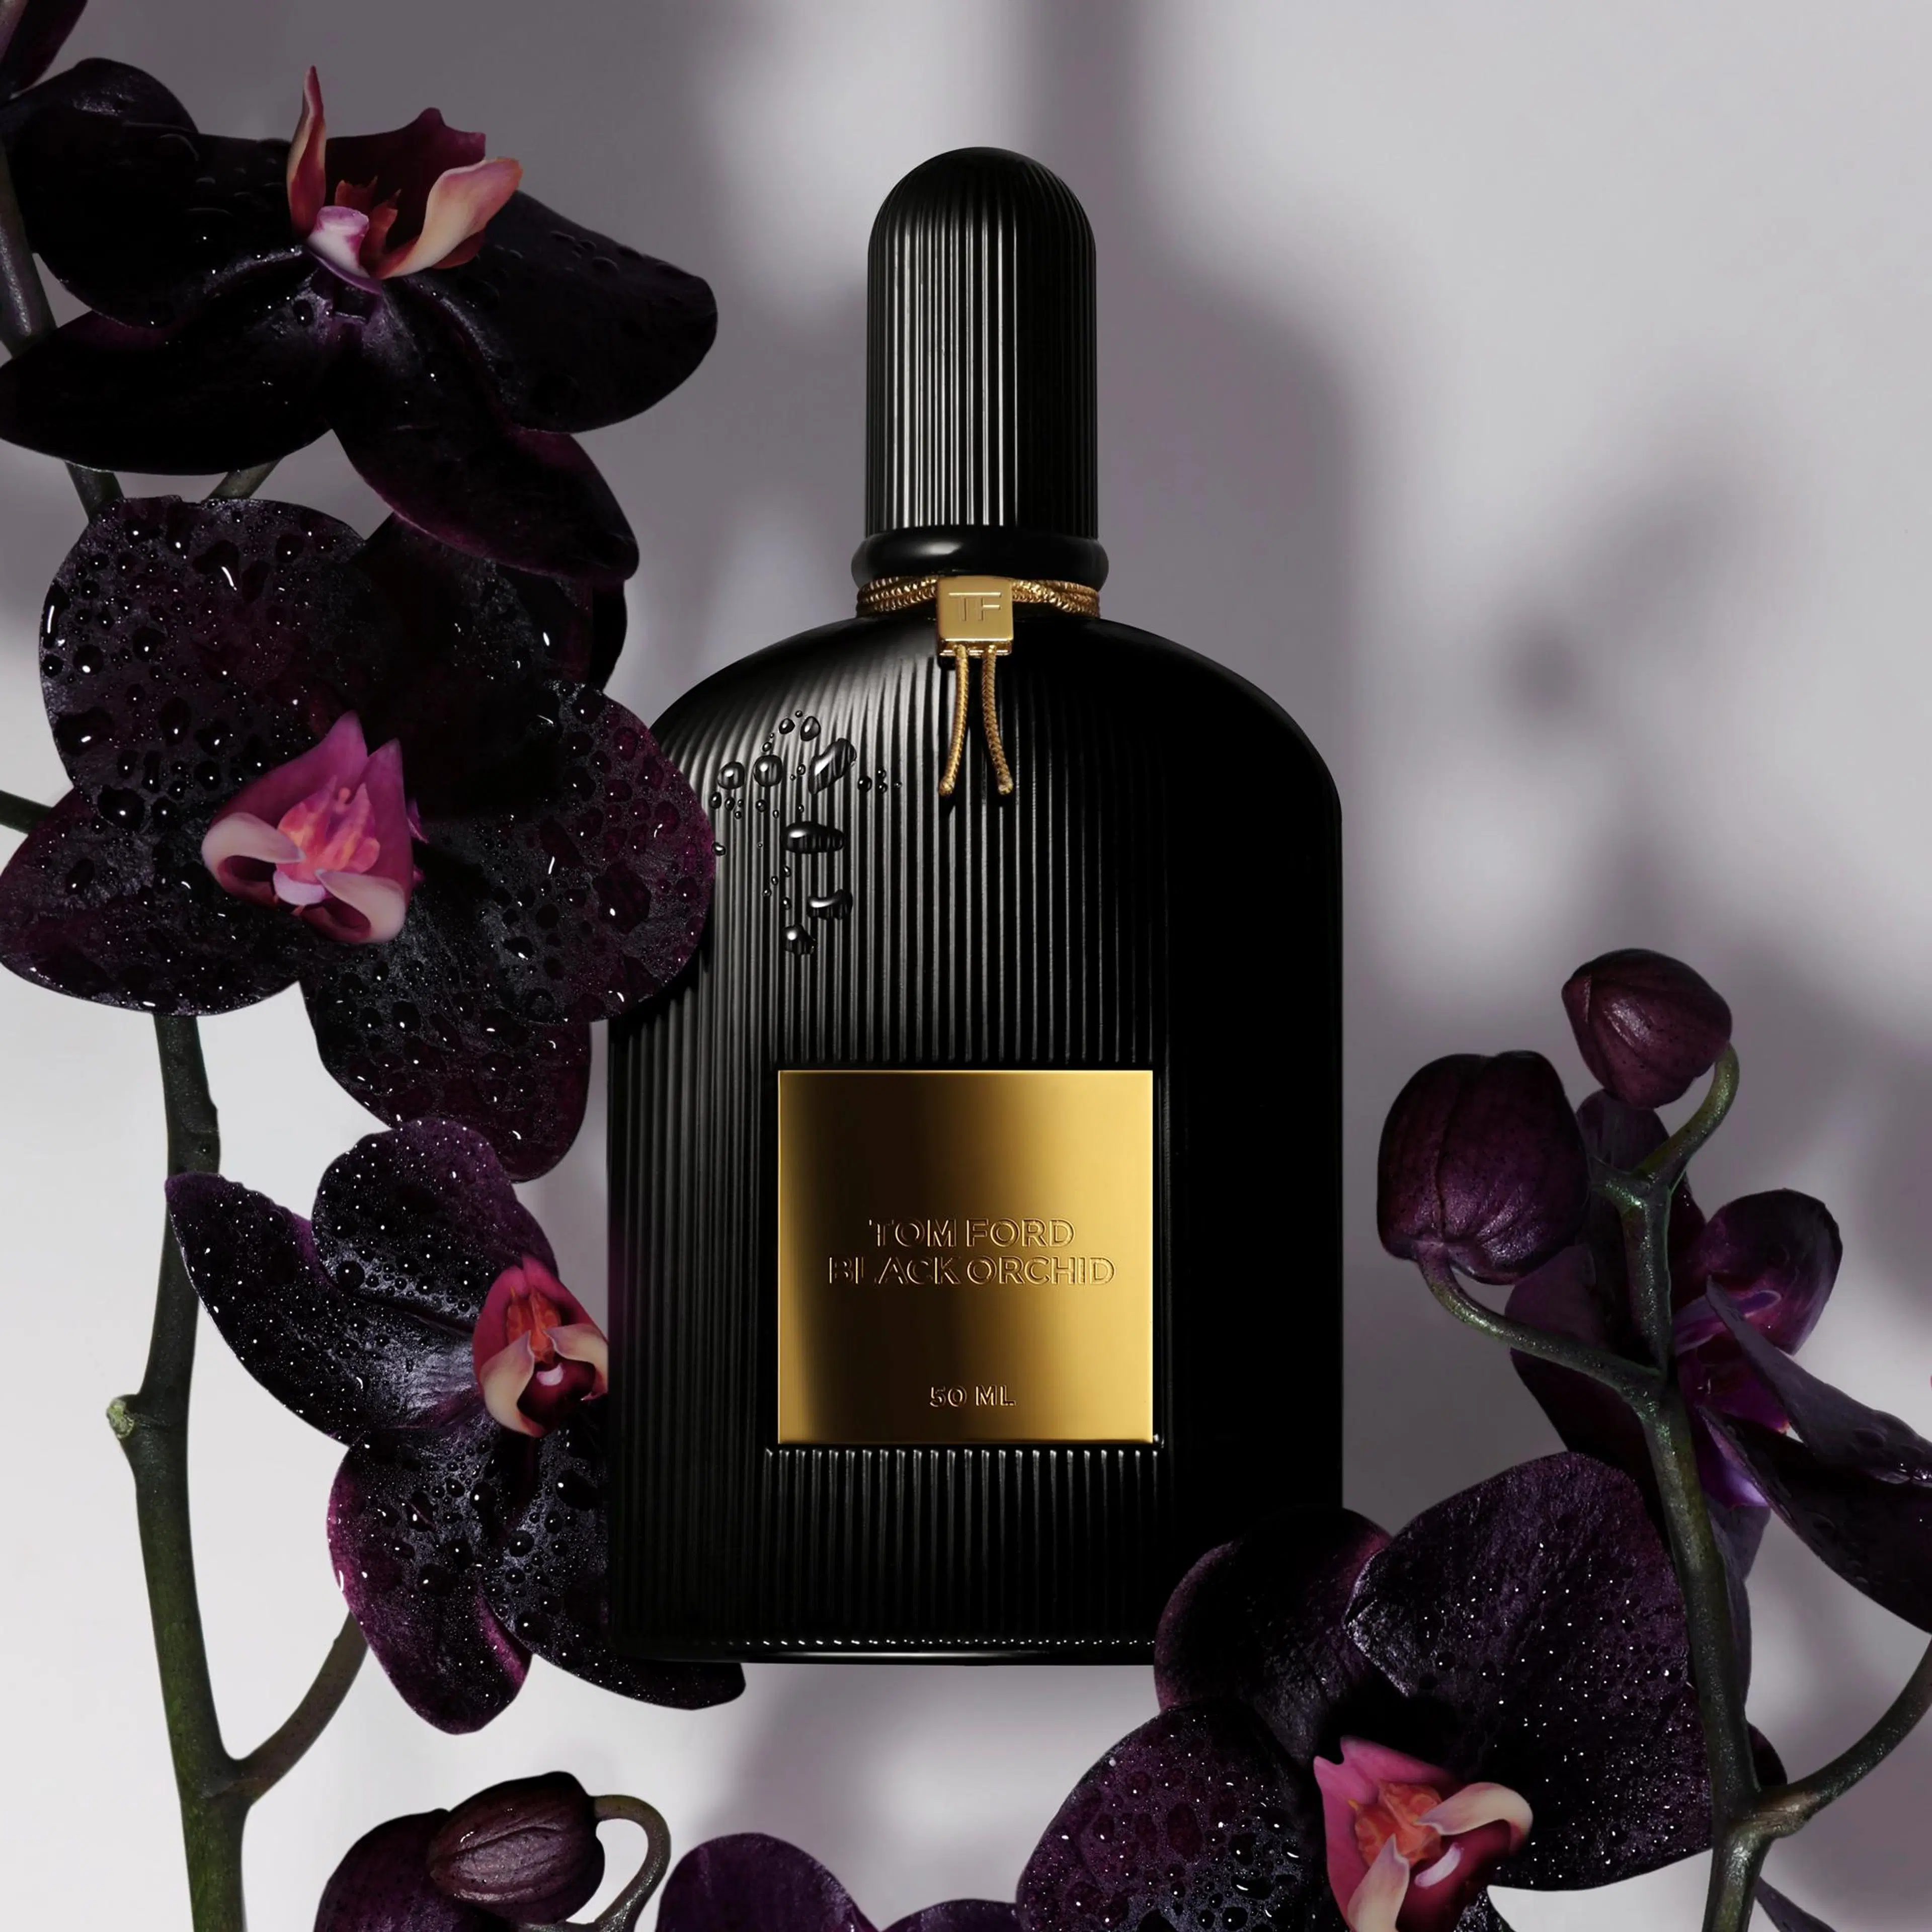 Tom Ford Black Orchid EdP tuoksu 100 ml